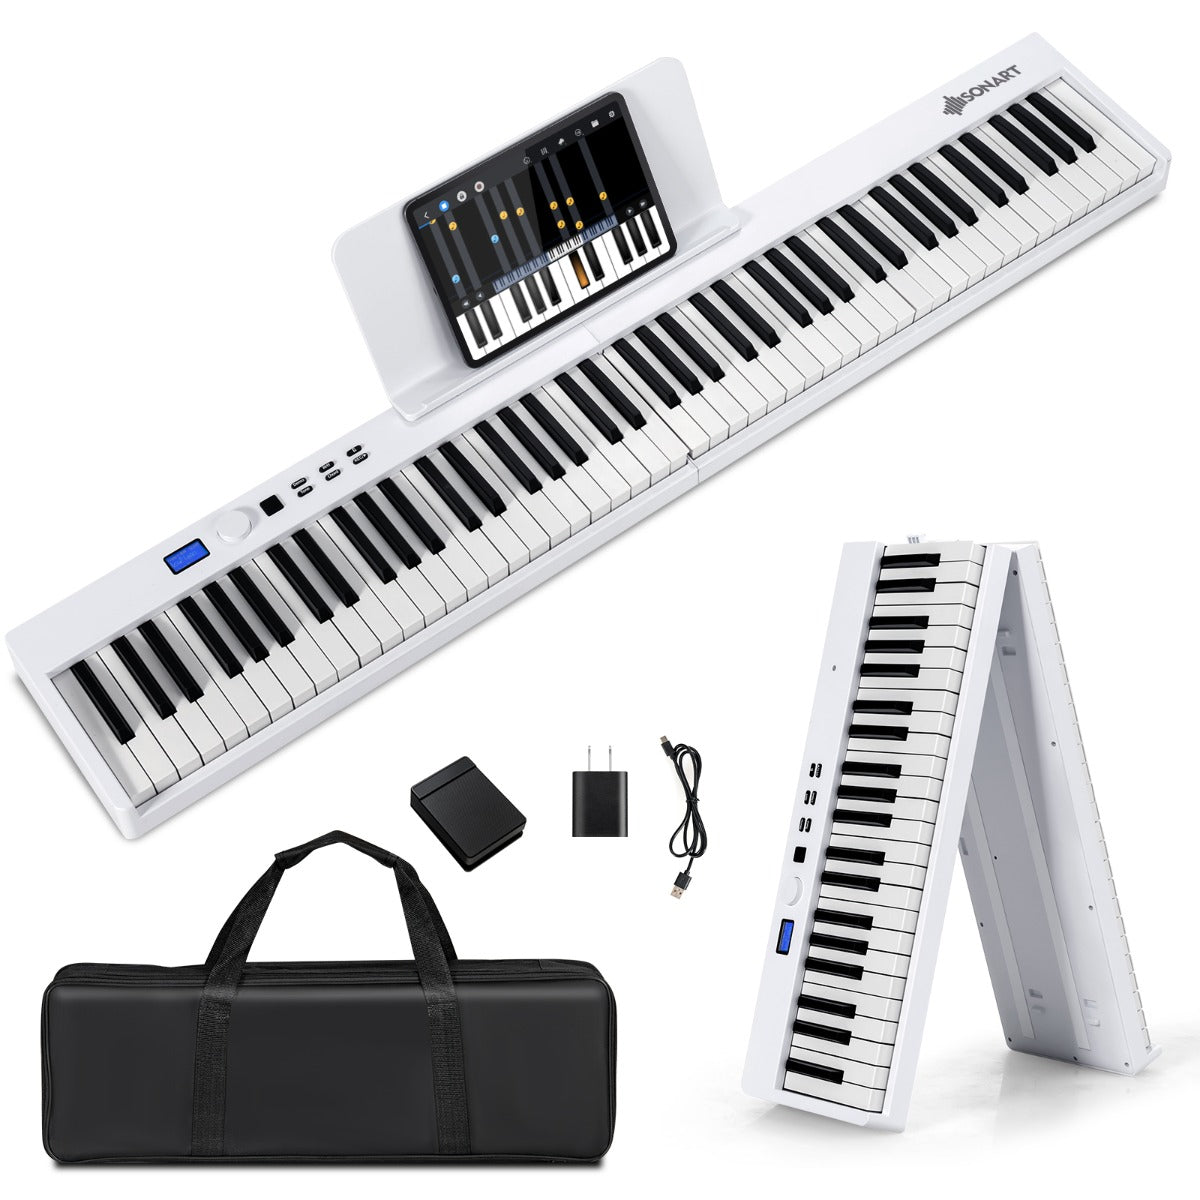 Shop the White 88-Key Foldable Digital Piano with MIDI at Kids Mega Mart